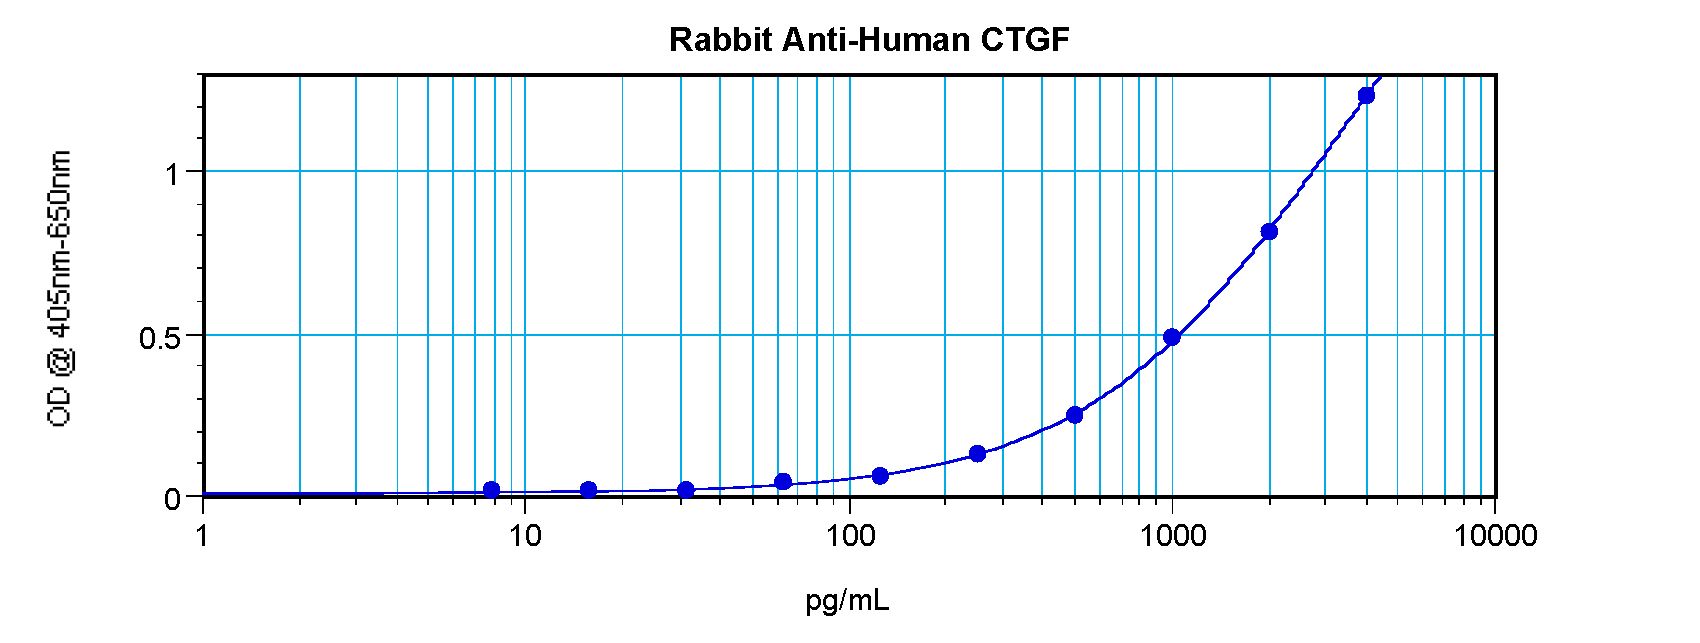 CTGF Antibody - Sandwich ELISA of CTGF antibody